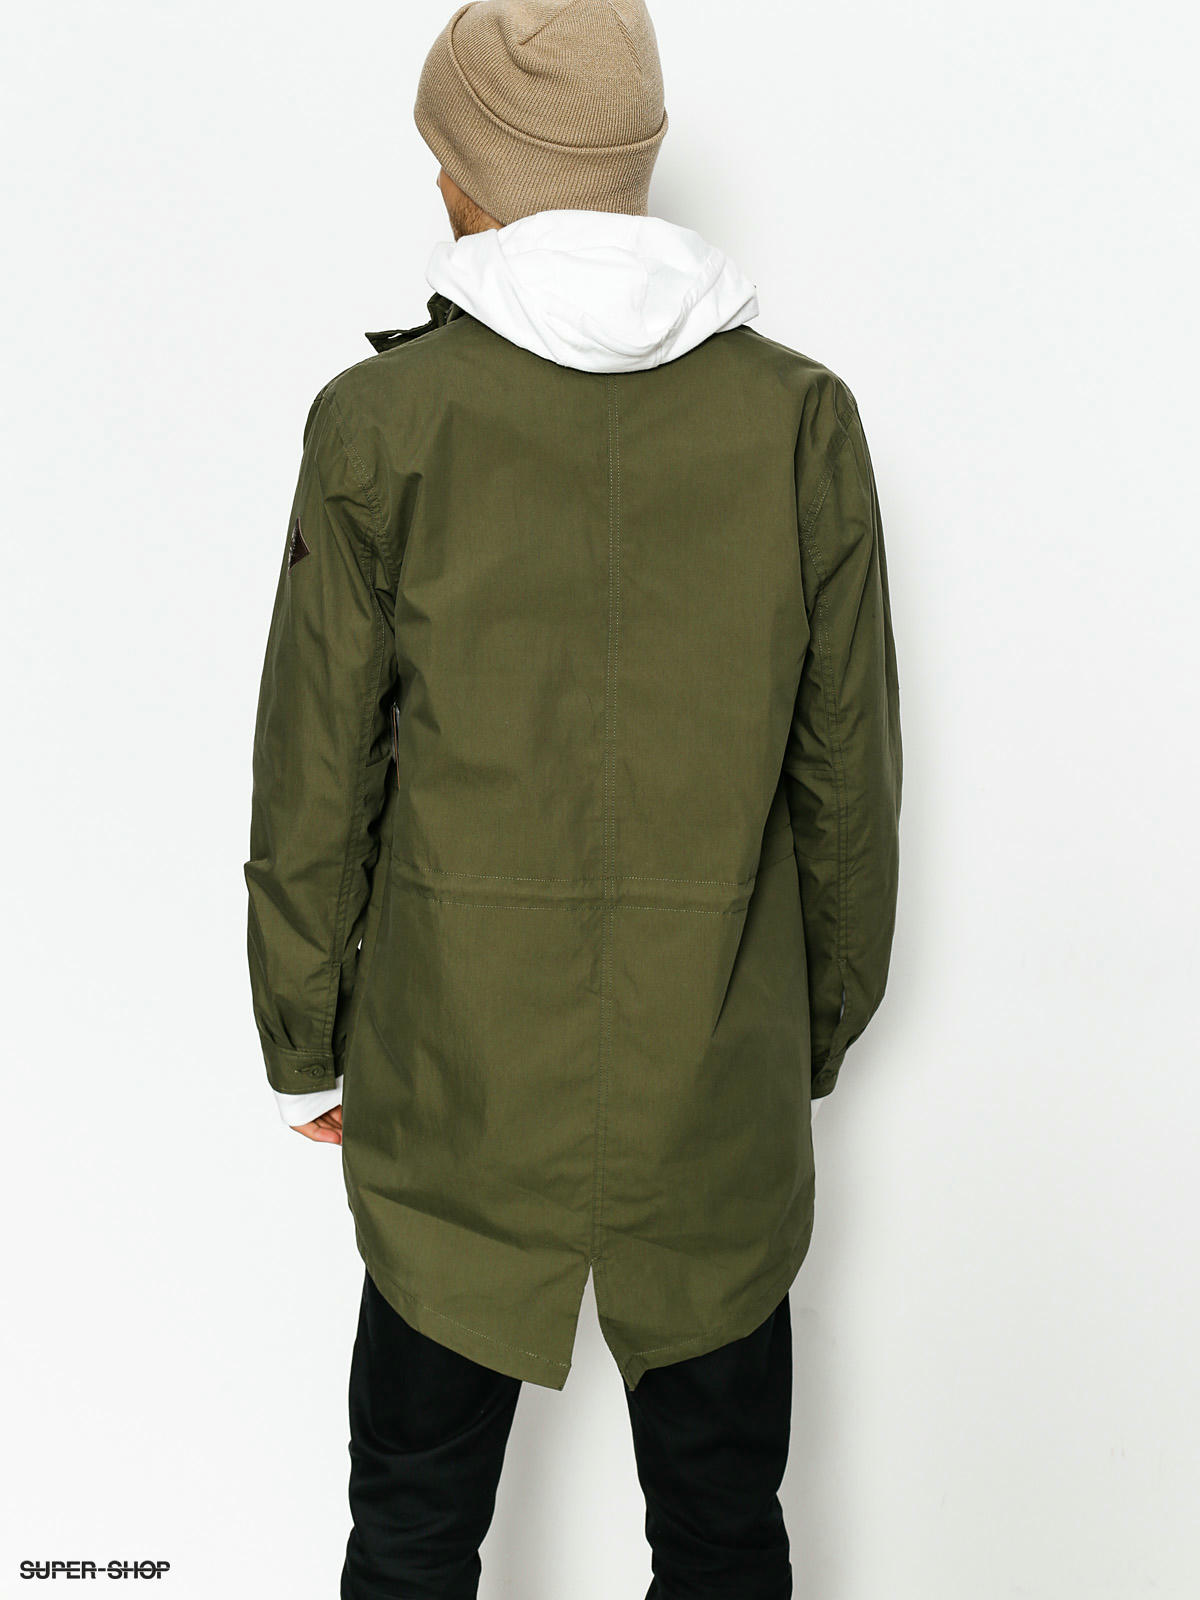 vans army green jacket